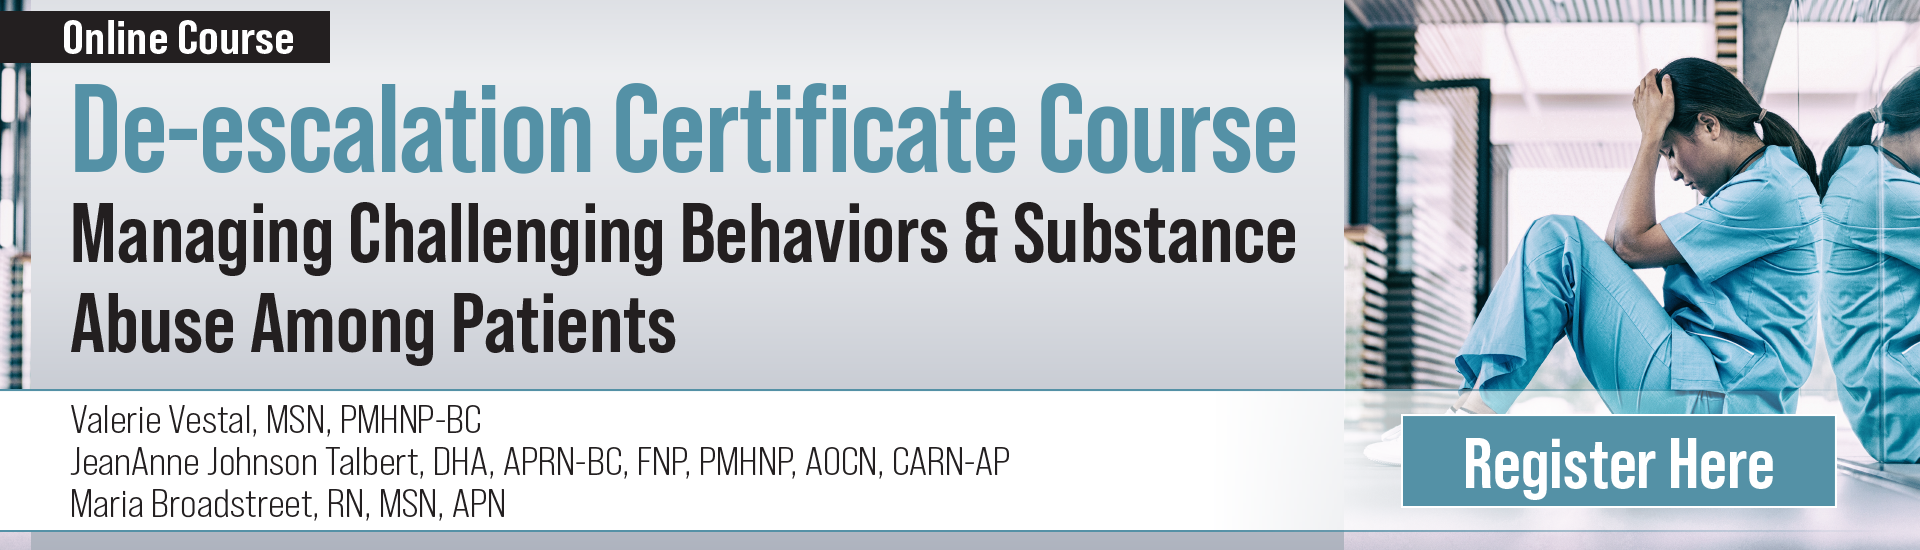 De-escalation Certificate Course: Managing Challenging Behaviors & Substance Abuse Among Patients